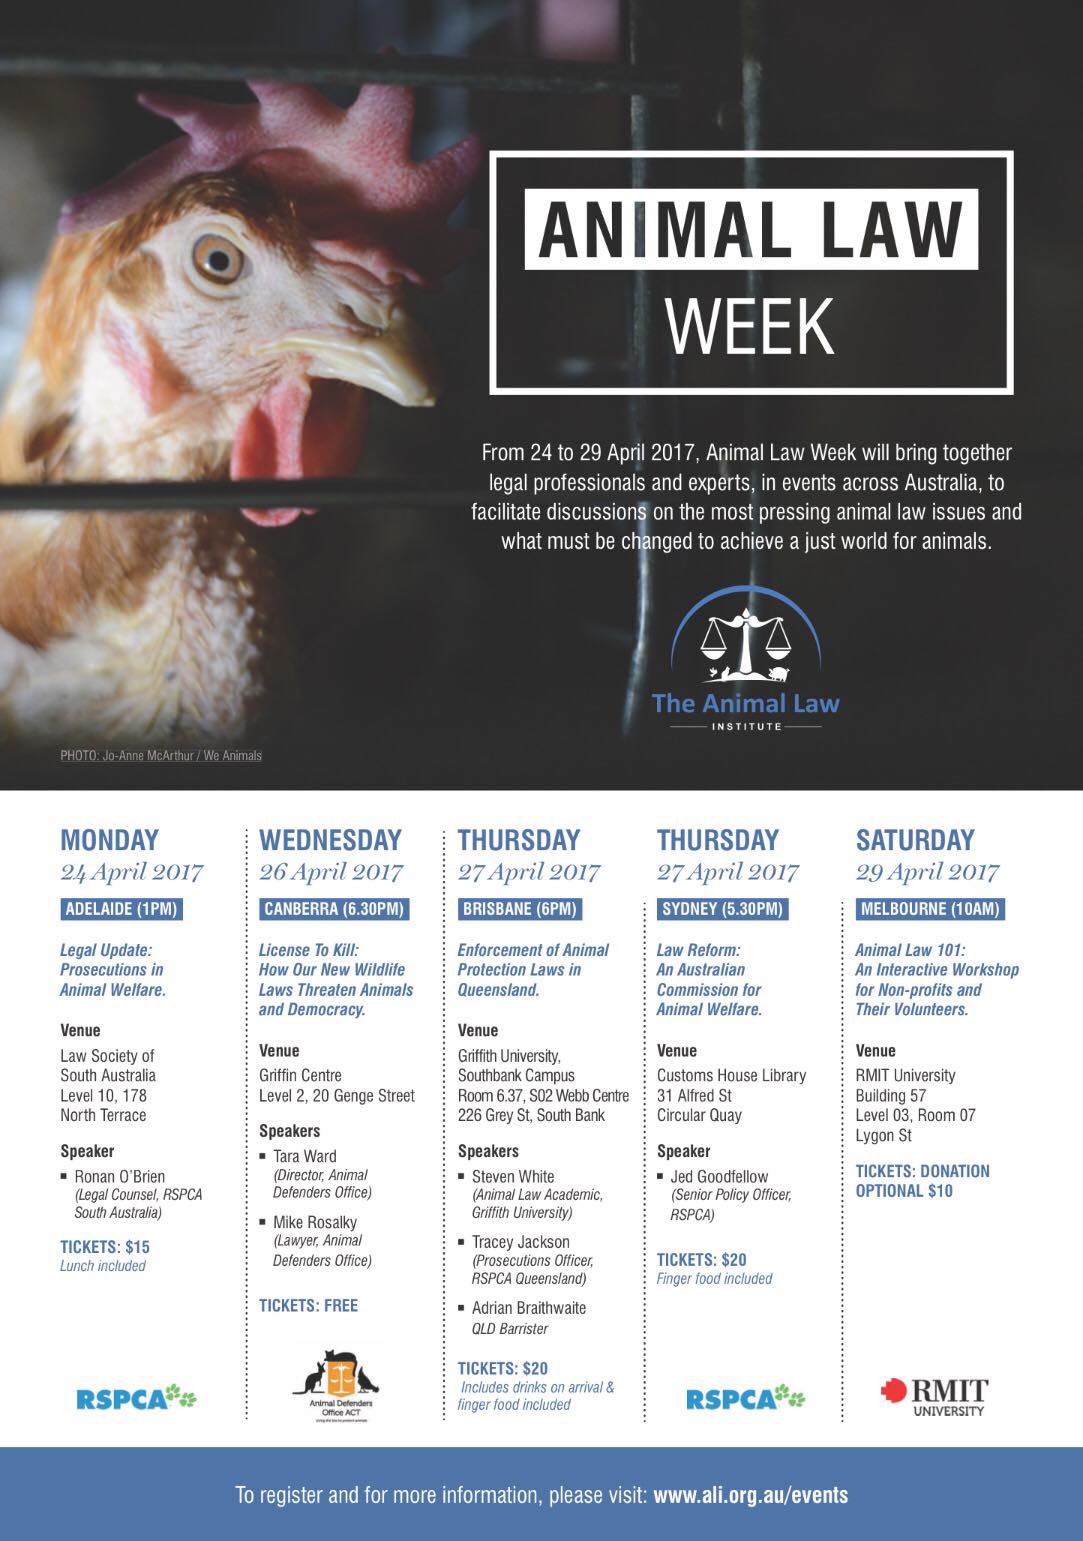 The Animal Law Institute